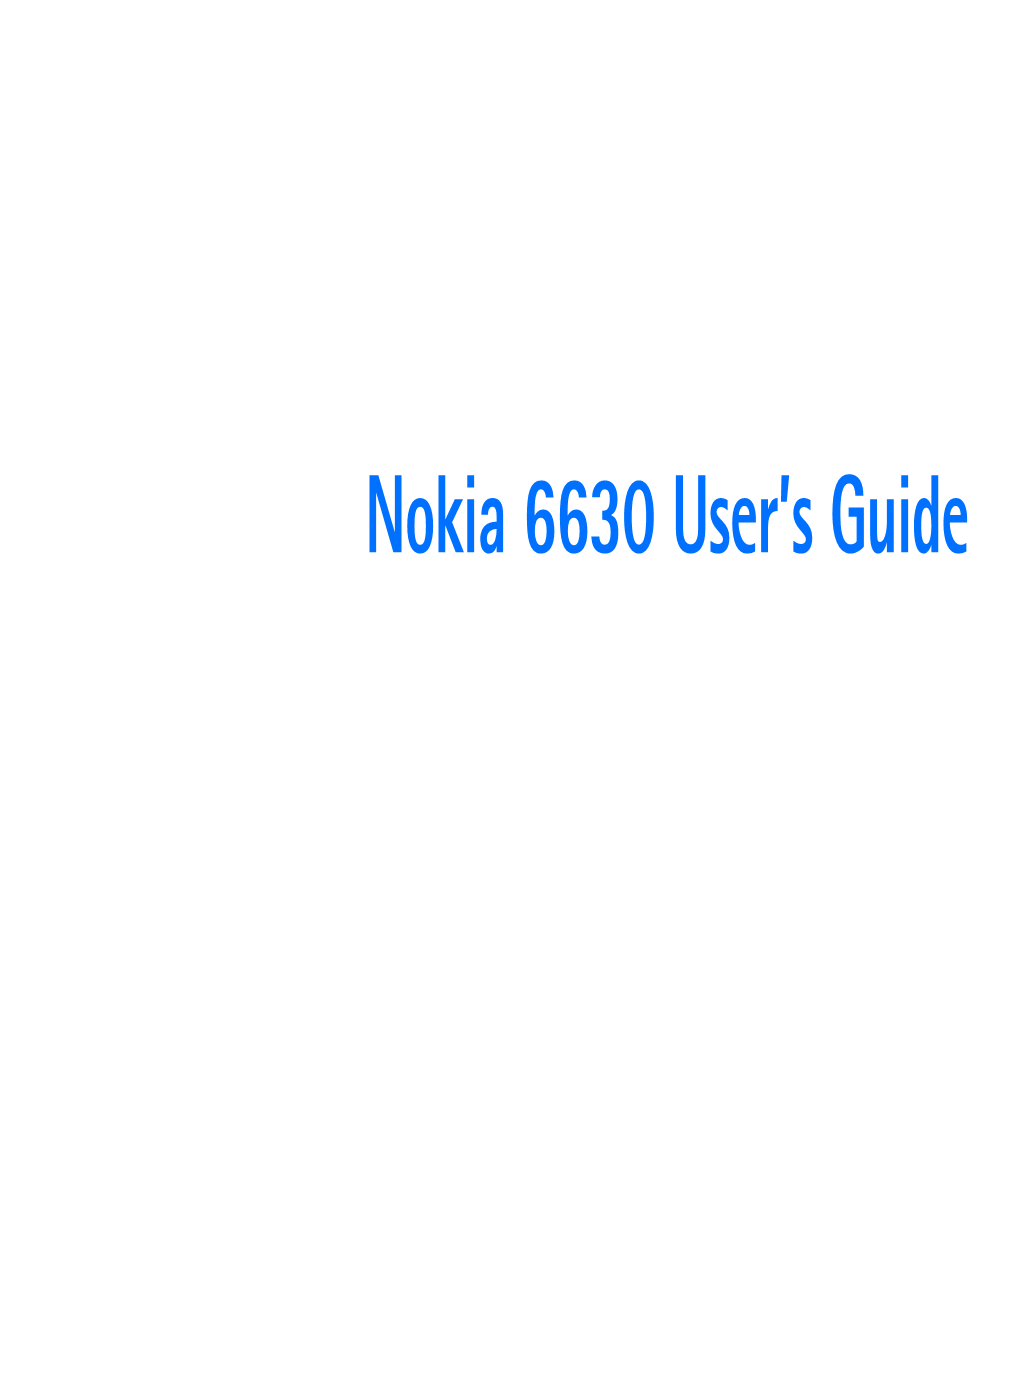 Nokia 6630 User's Guide